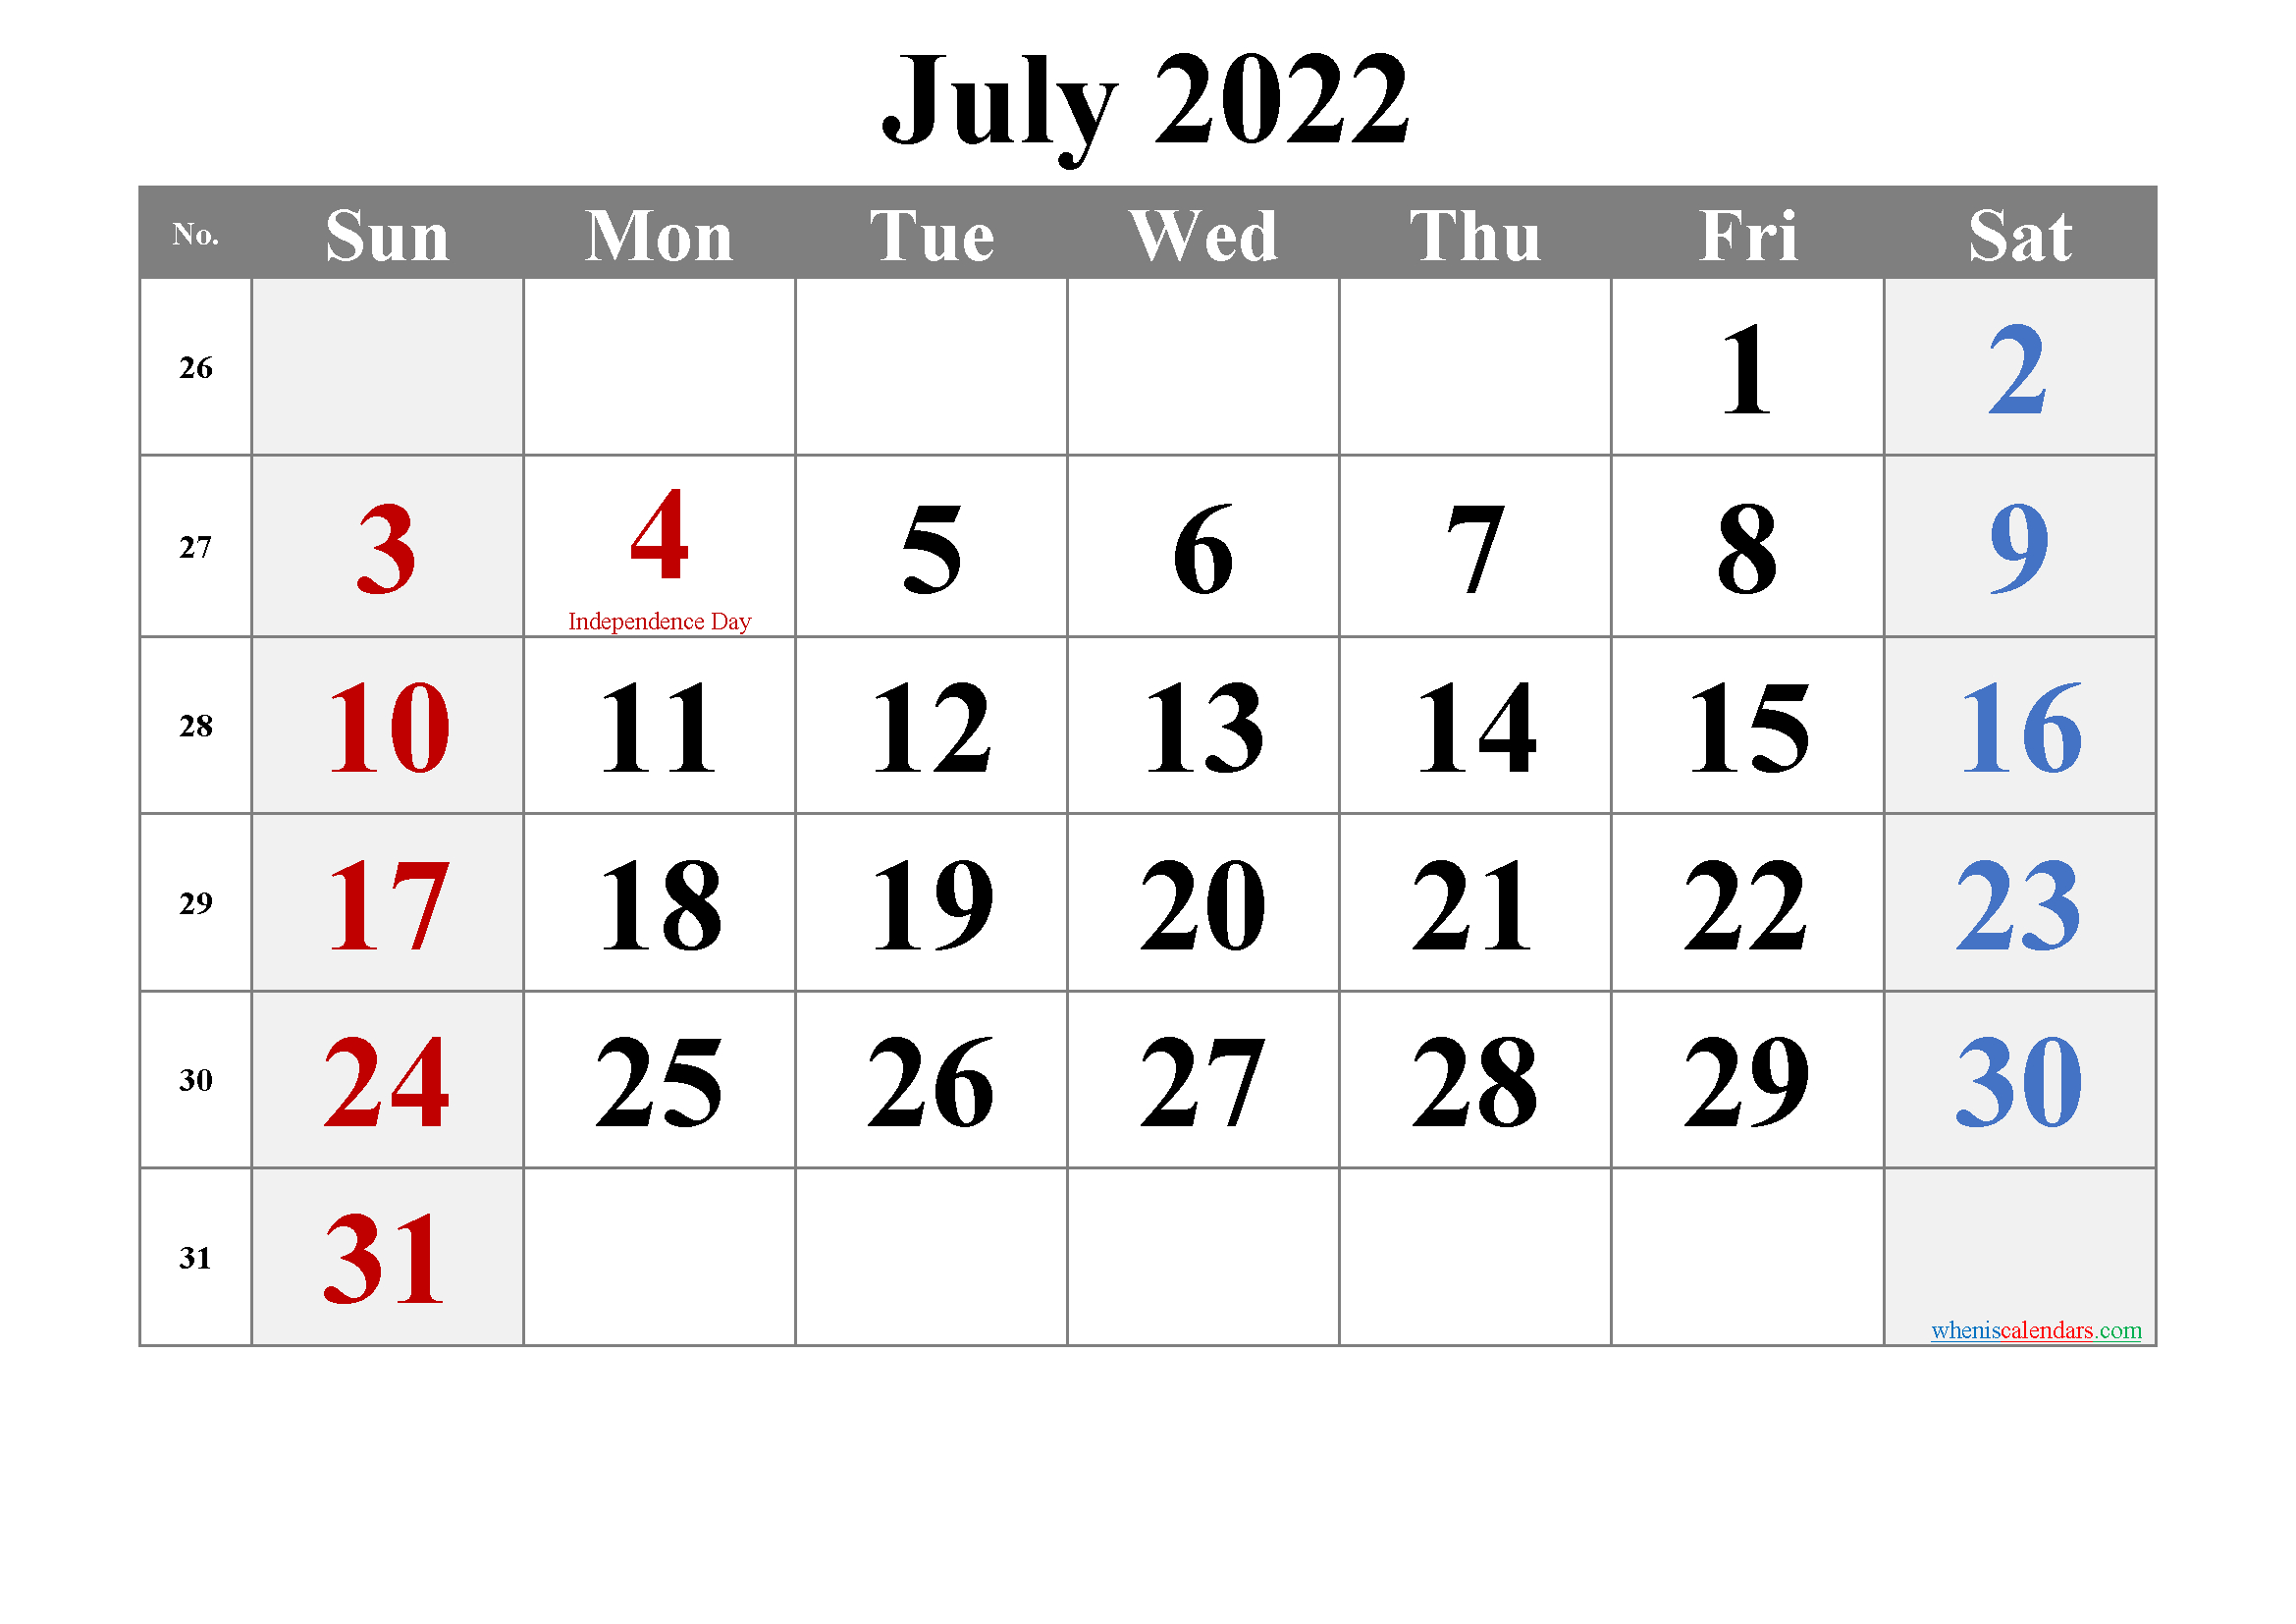 Catch July 2022 Calendar Template